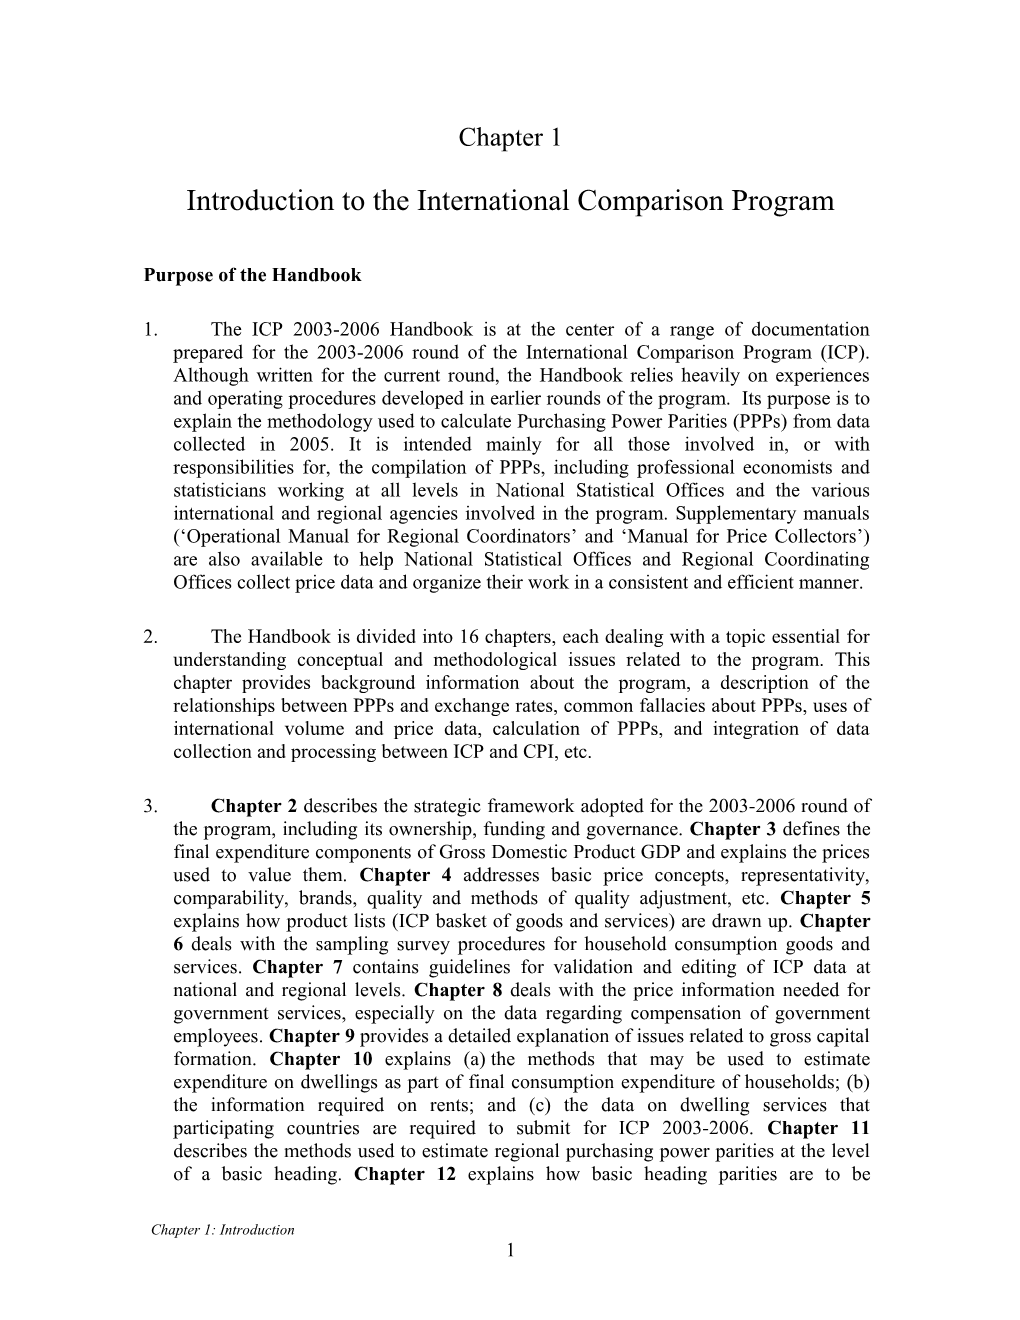 Introduction to the International Comparison Program